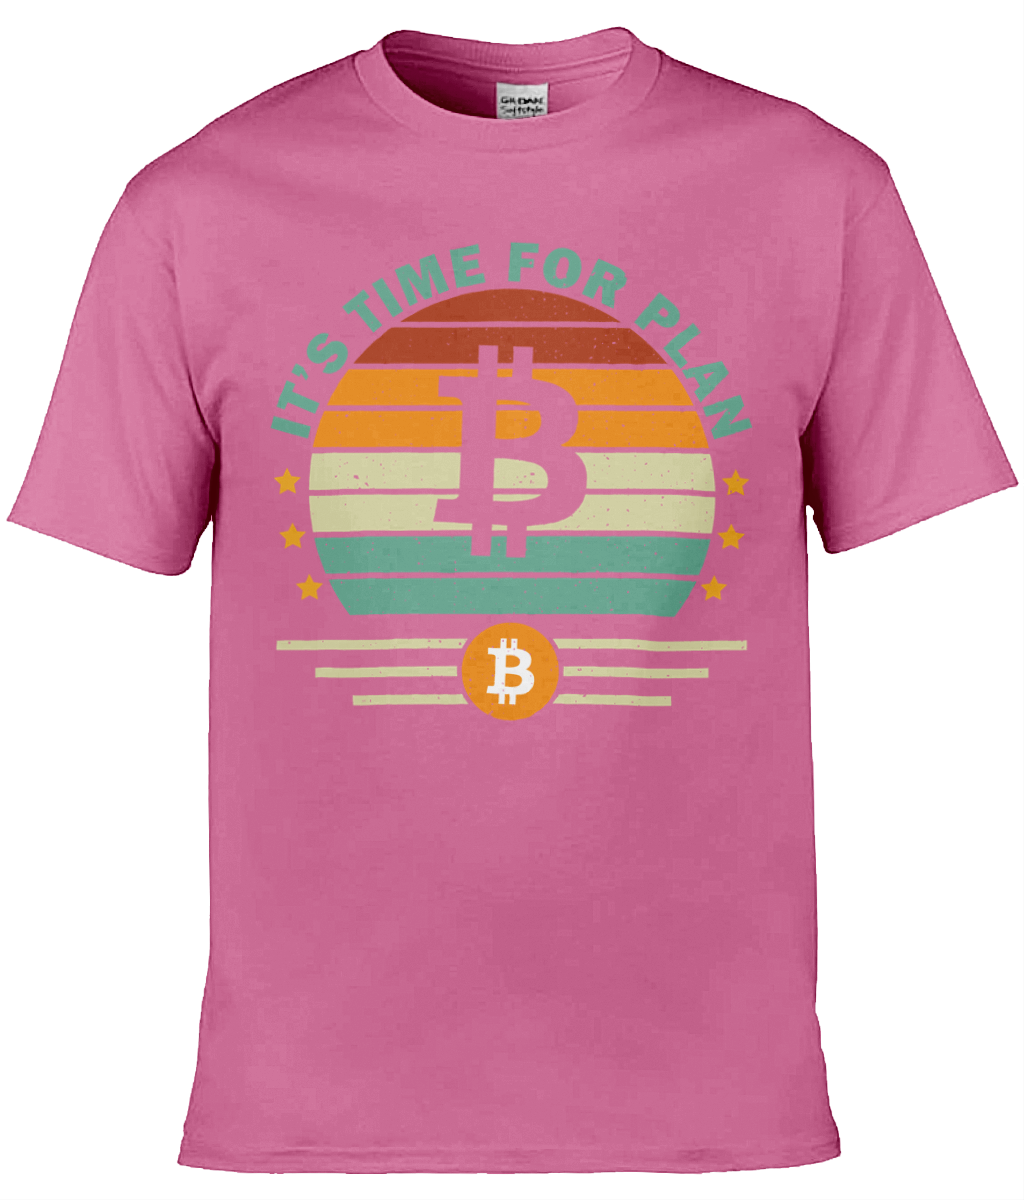 Time For Plan B Bitcoin T-shirt, Unisex T-shirt